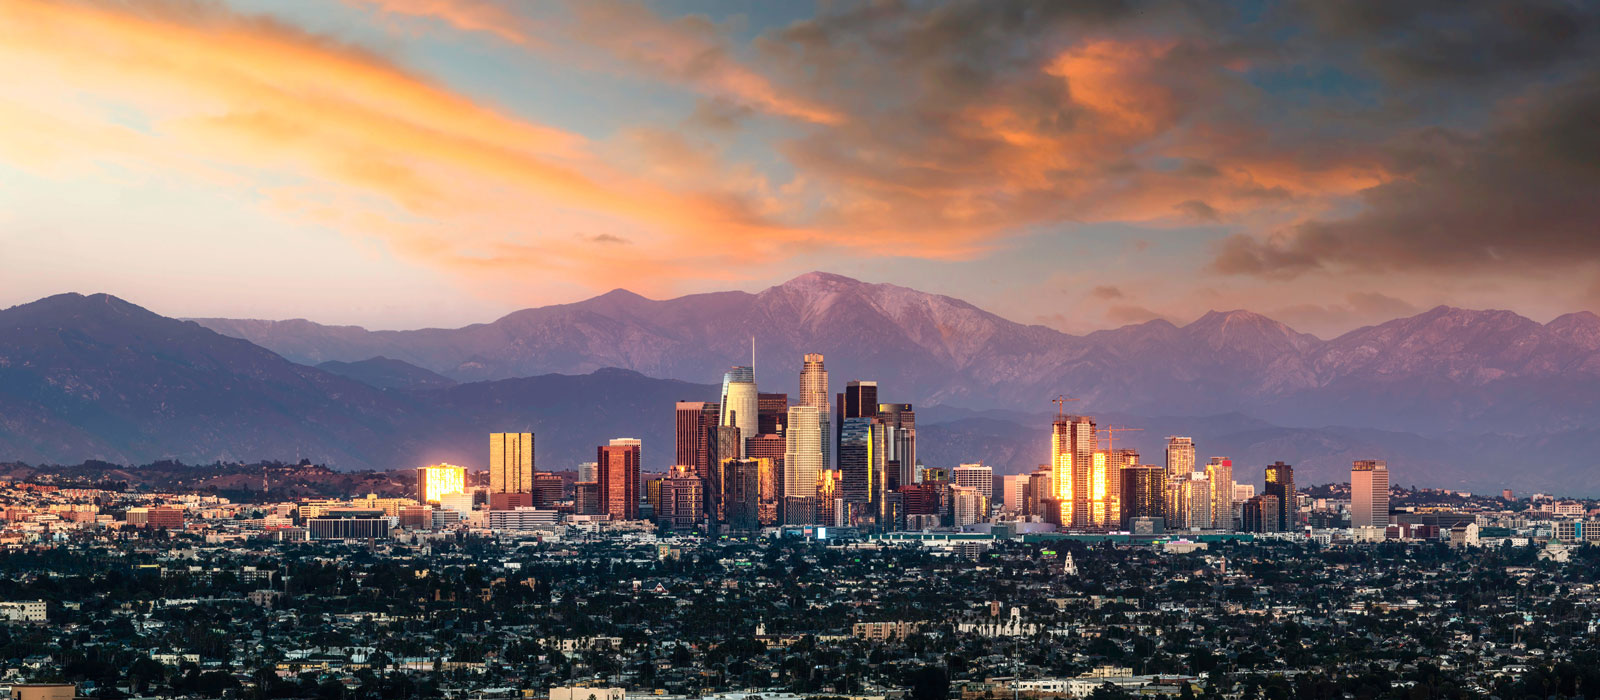 Los Angeles skyline in California